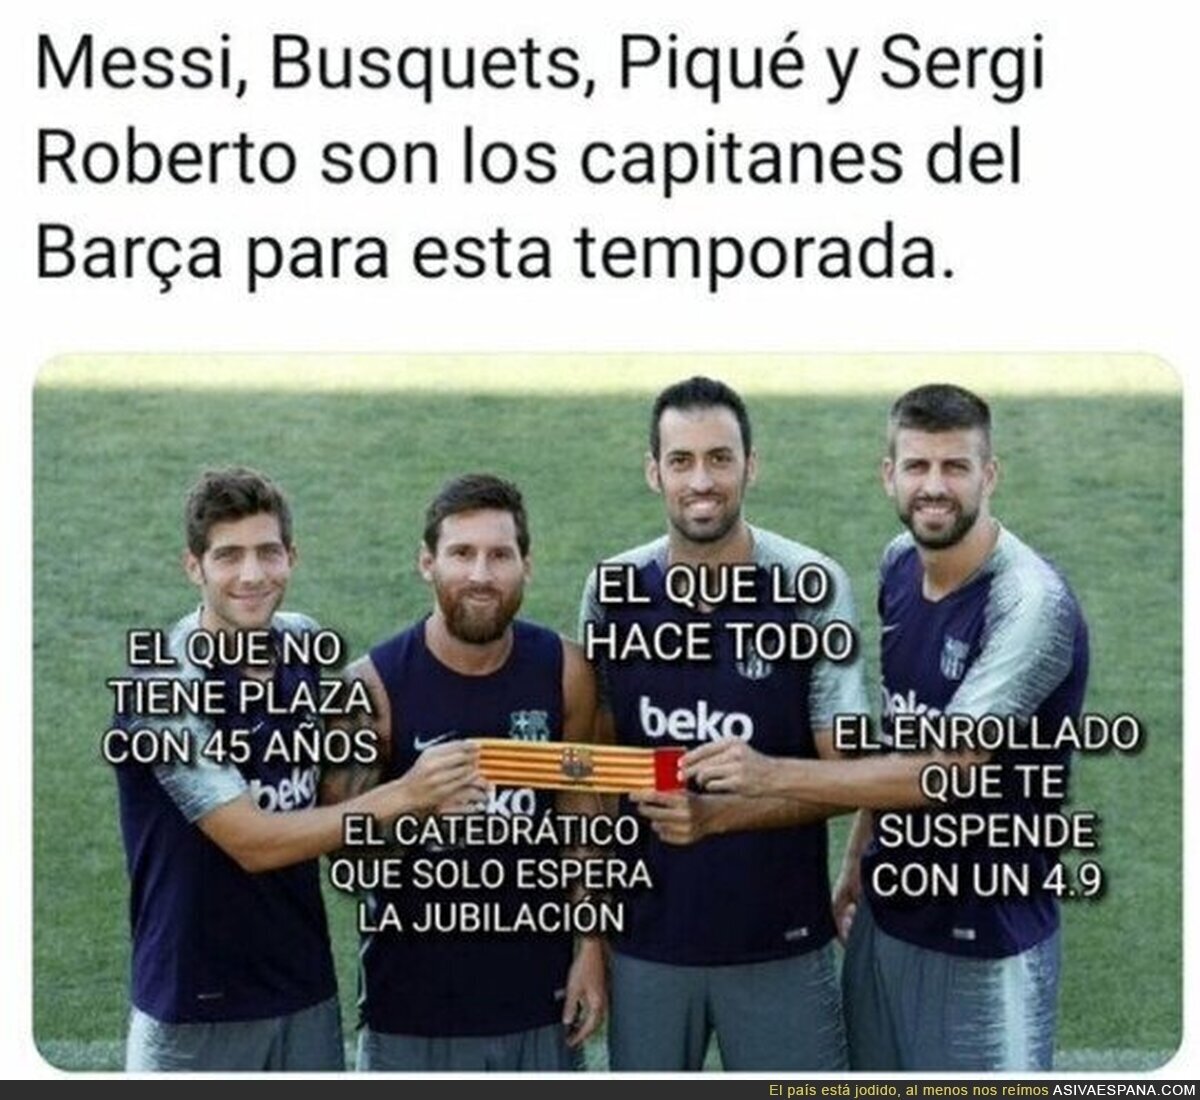 Los capitanes del Barça